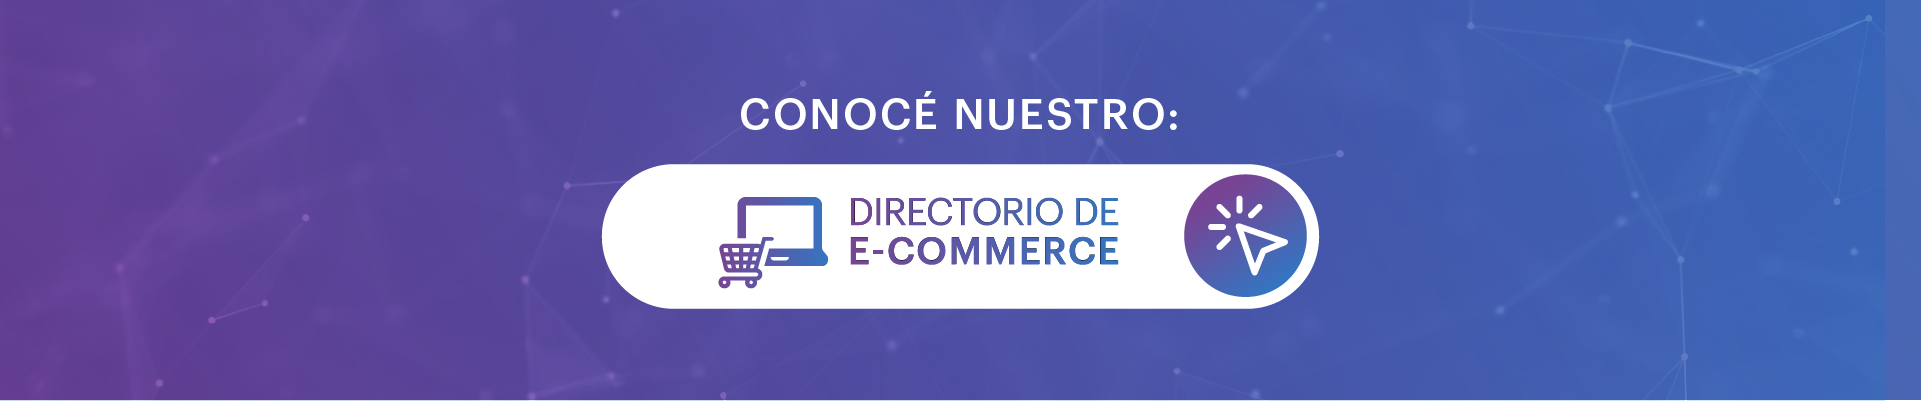 Banner_directorio_ecommerce